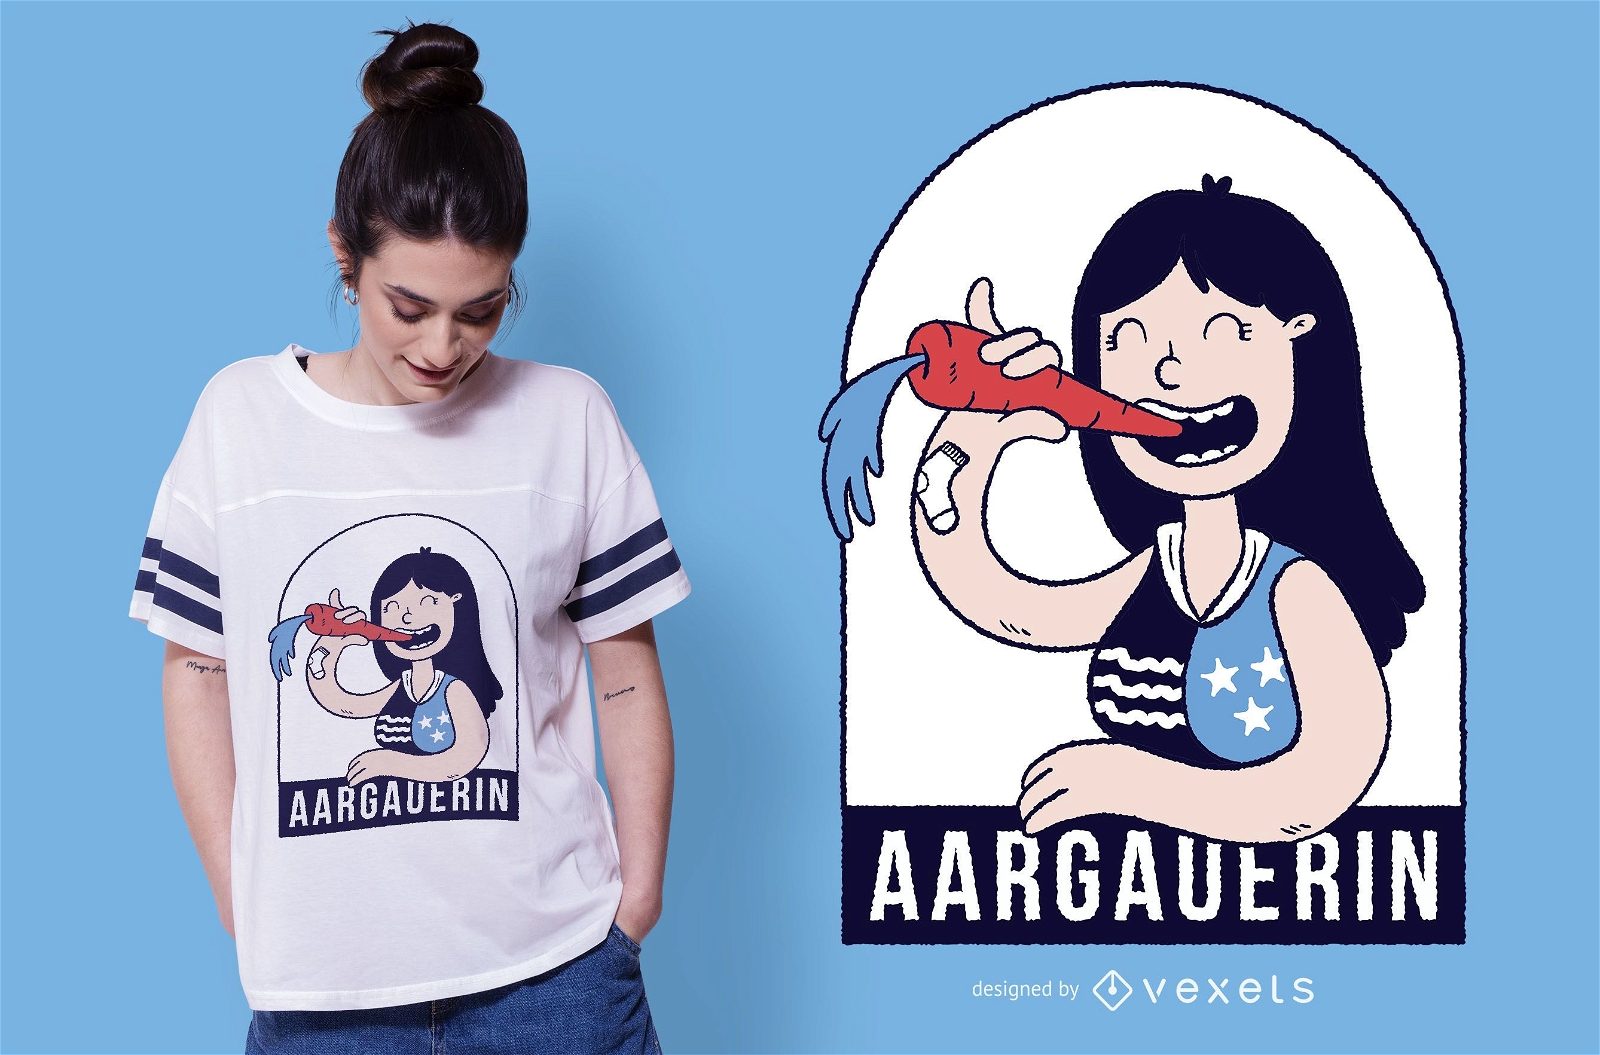 Aargau Girl Funny T-shirt Design